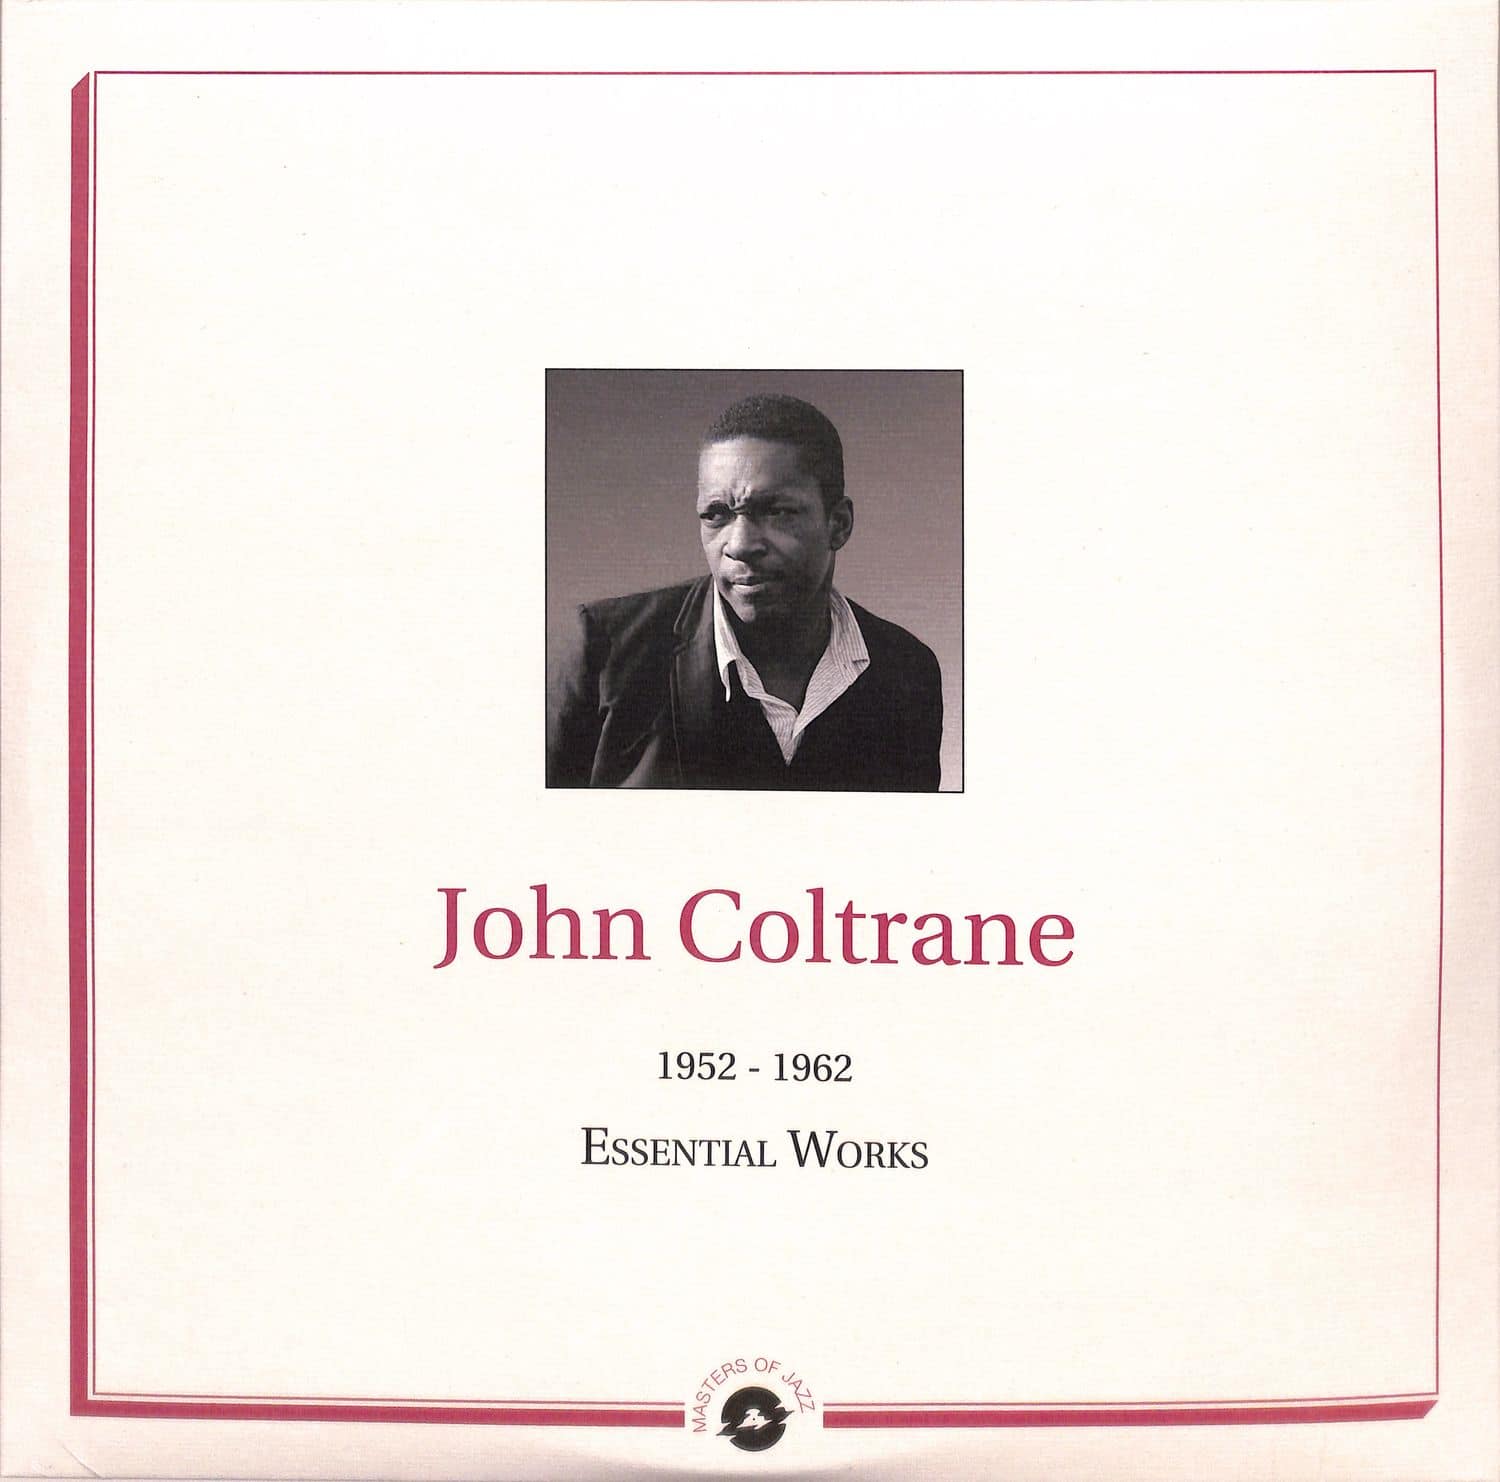 John Coltrane - ESSENTIAL WORKS: 1952-1962 